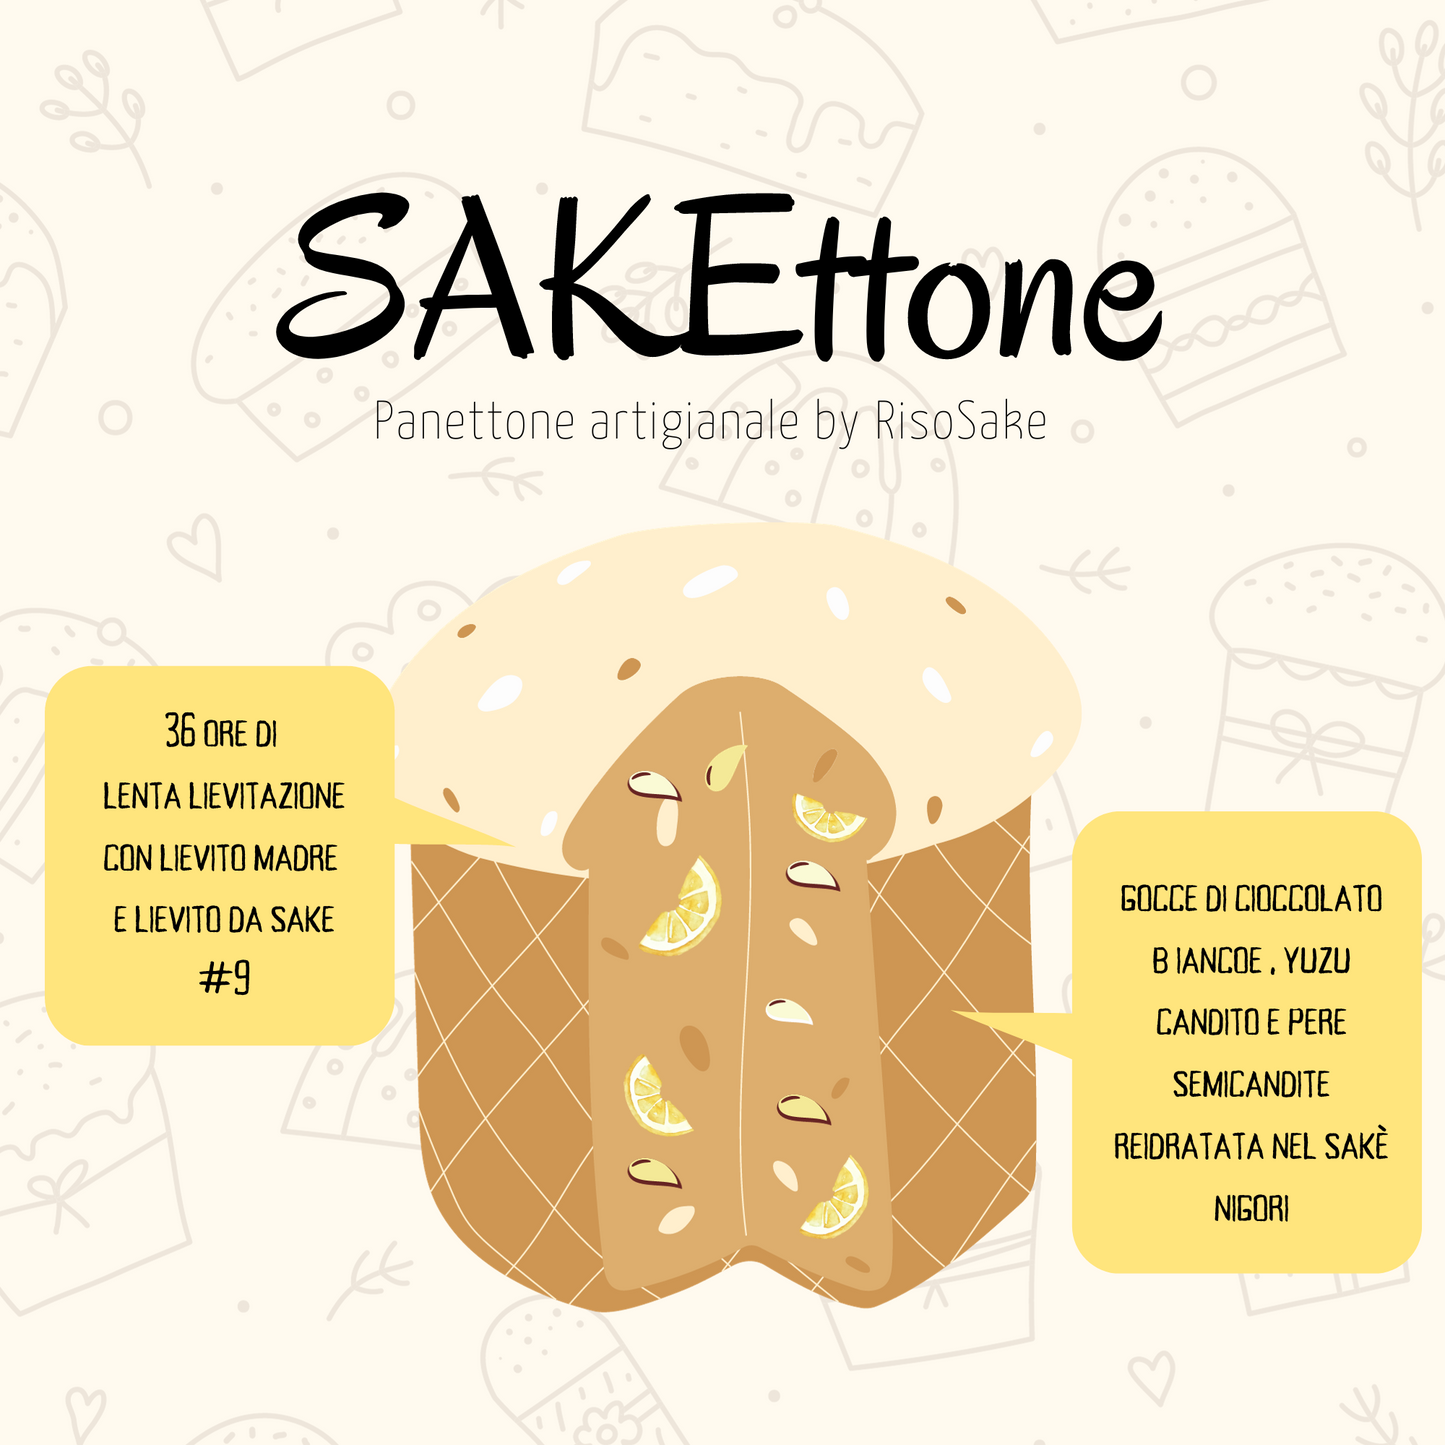 Sakettone: il nostro Panettone artigianale al sake